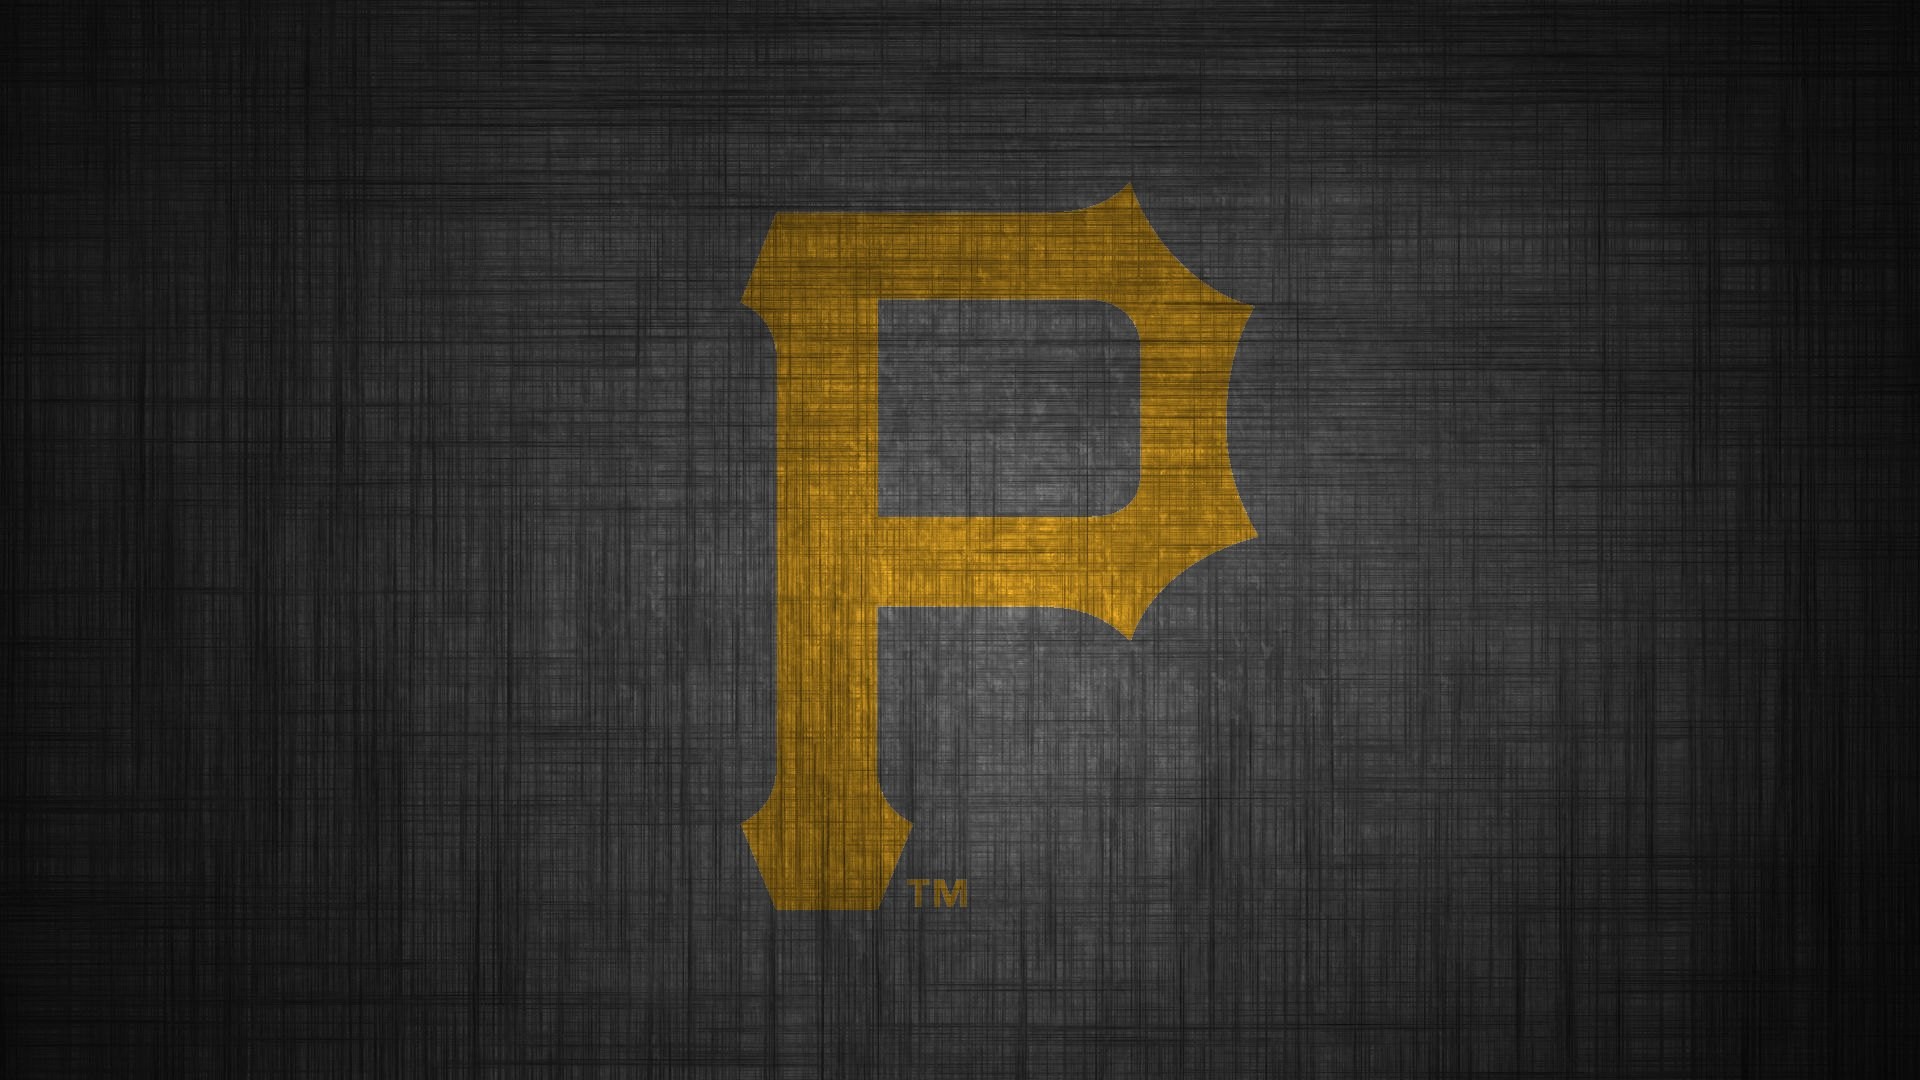 Pittsburgh Pirates Wallpaper Desktop 2018 66 images